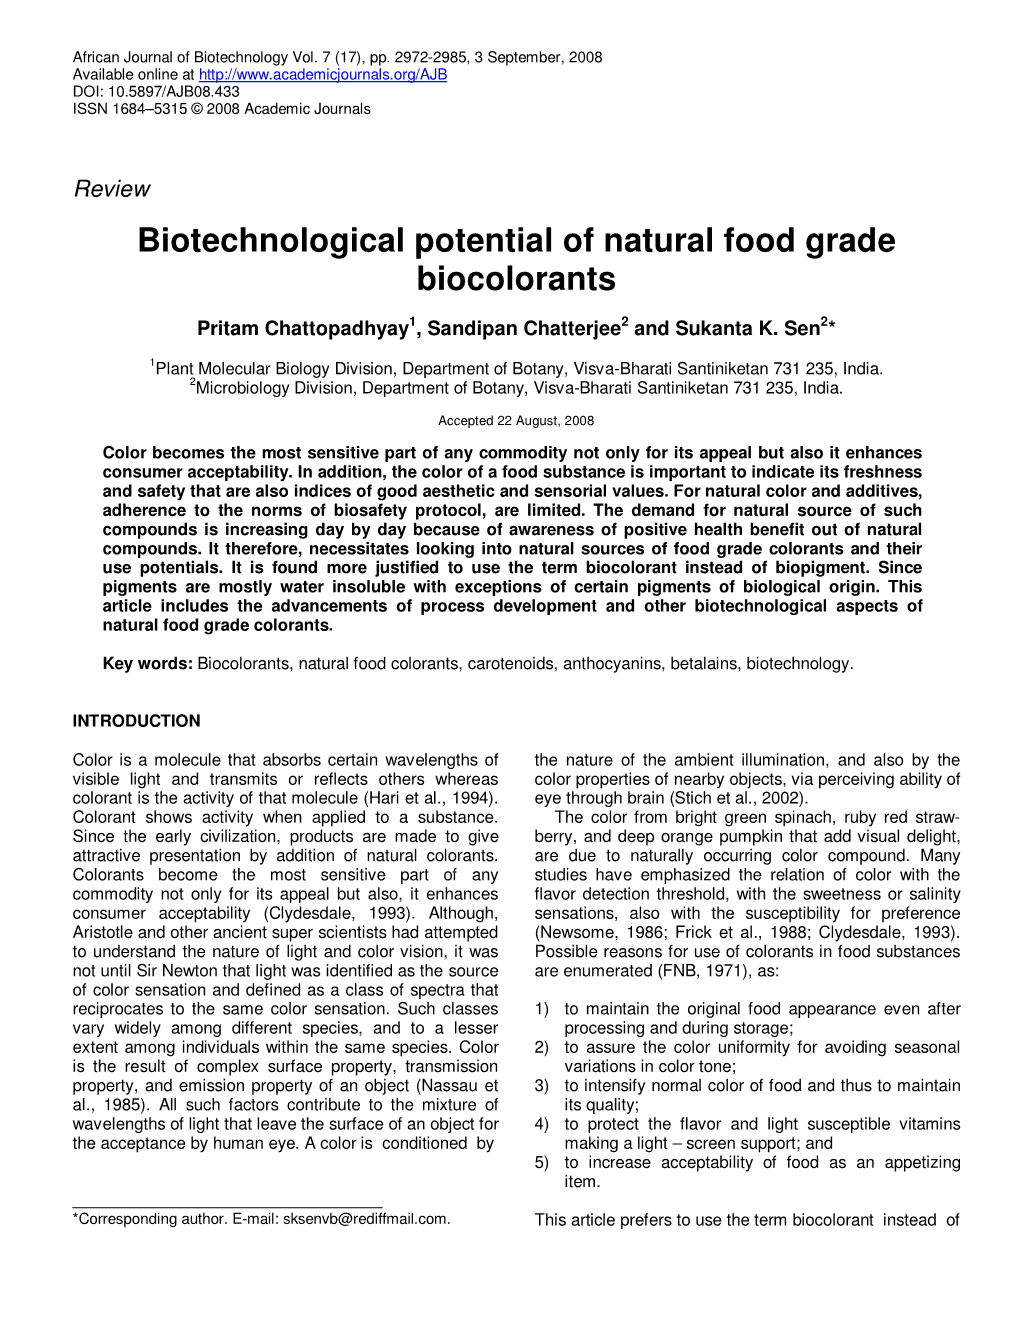 Biotechnological Potential of Natural Food Grade Biocolorants